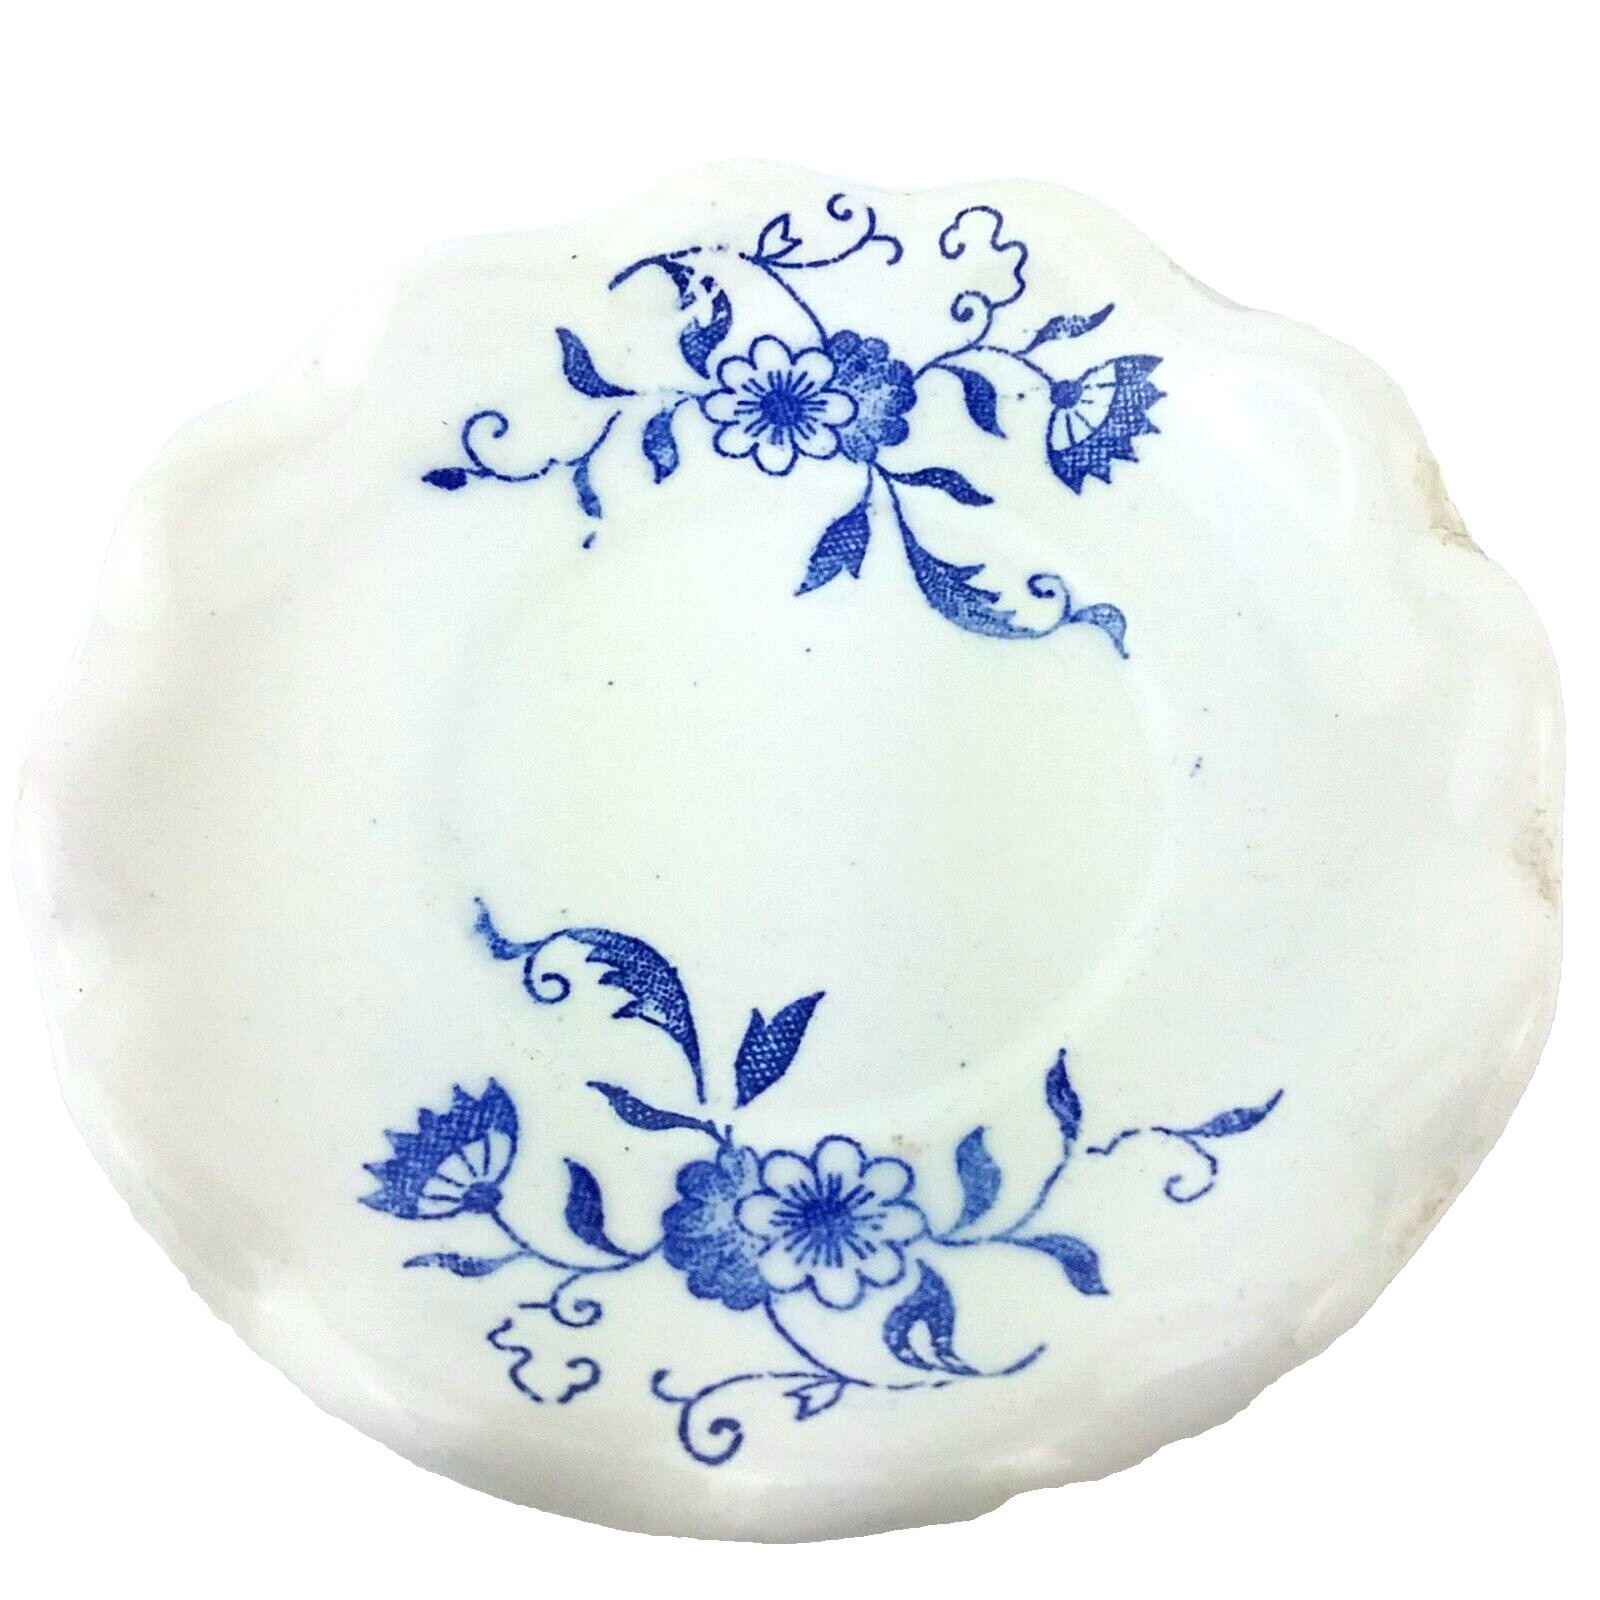 Vintage Trinket Dish White Royal Blue Floral Pattern Wavy Curved Edges Japan